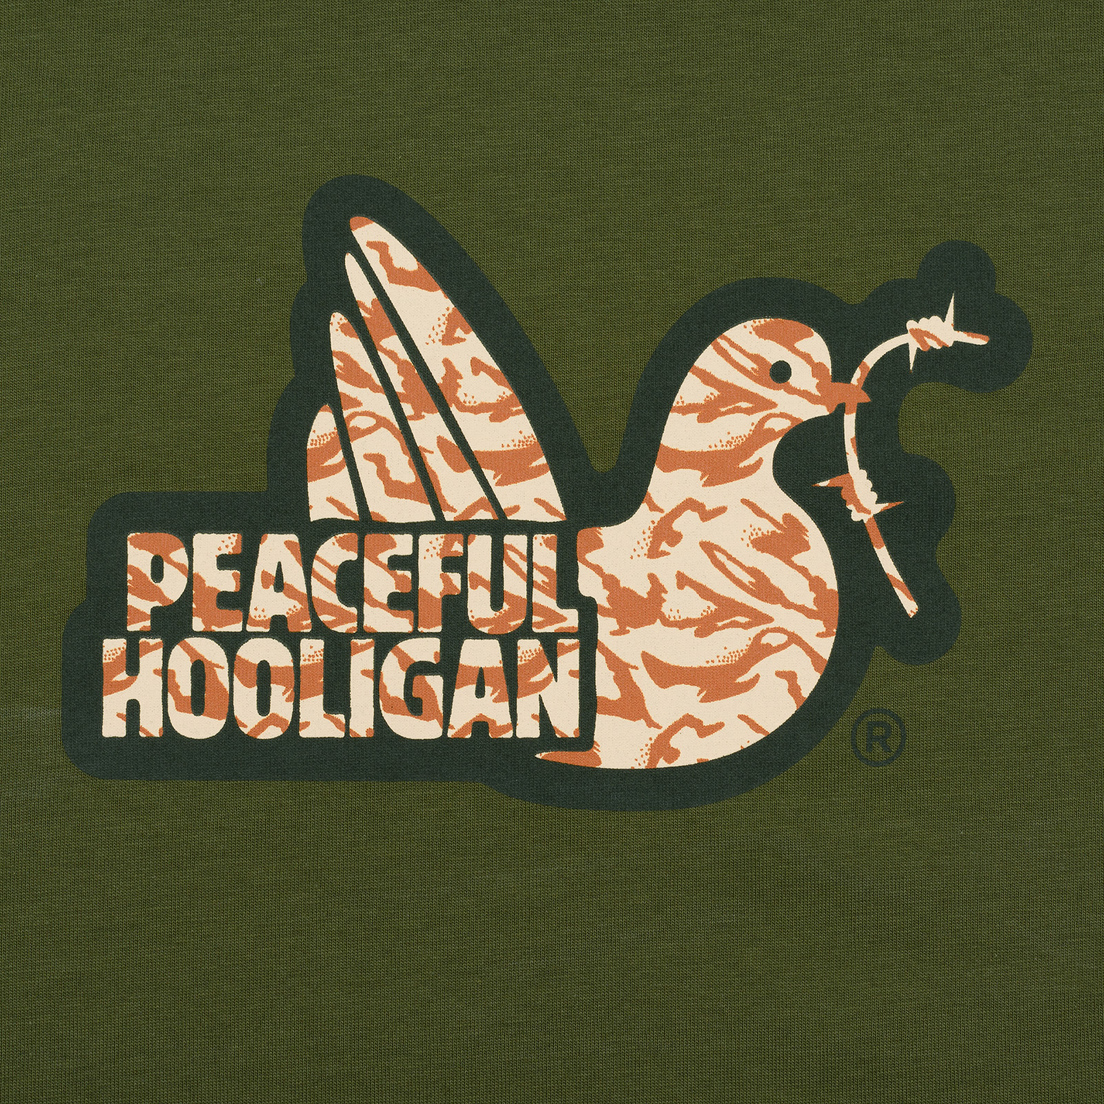 Peaceful Hooligan Мужская футболка Desert Dove